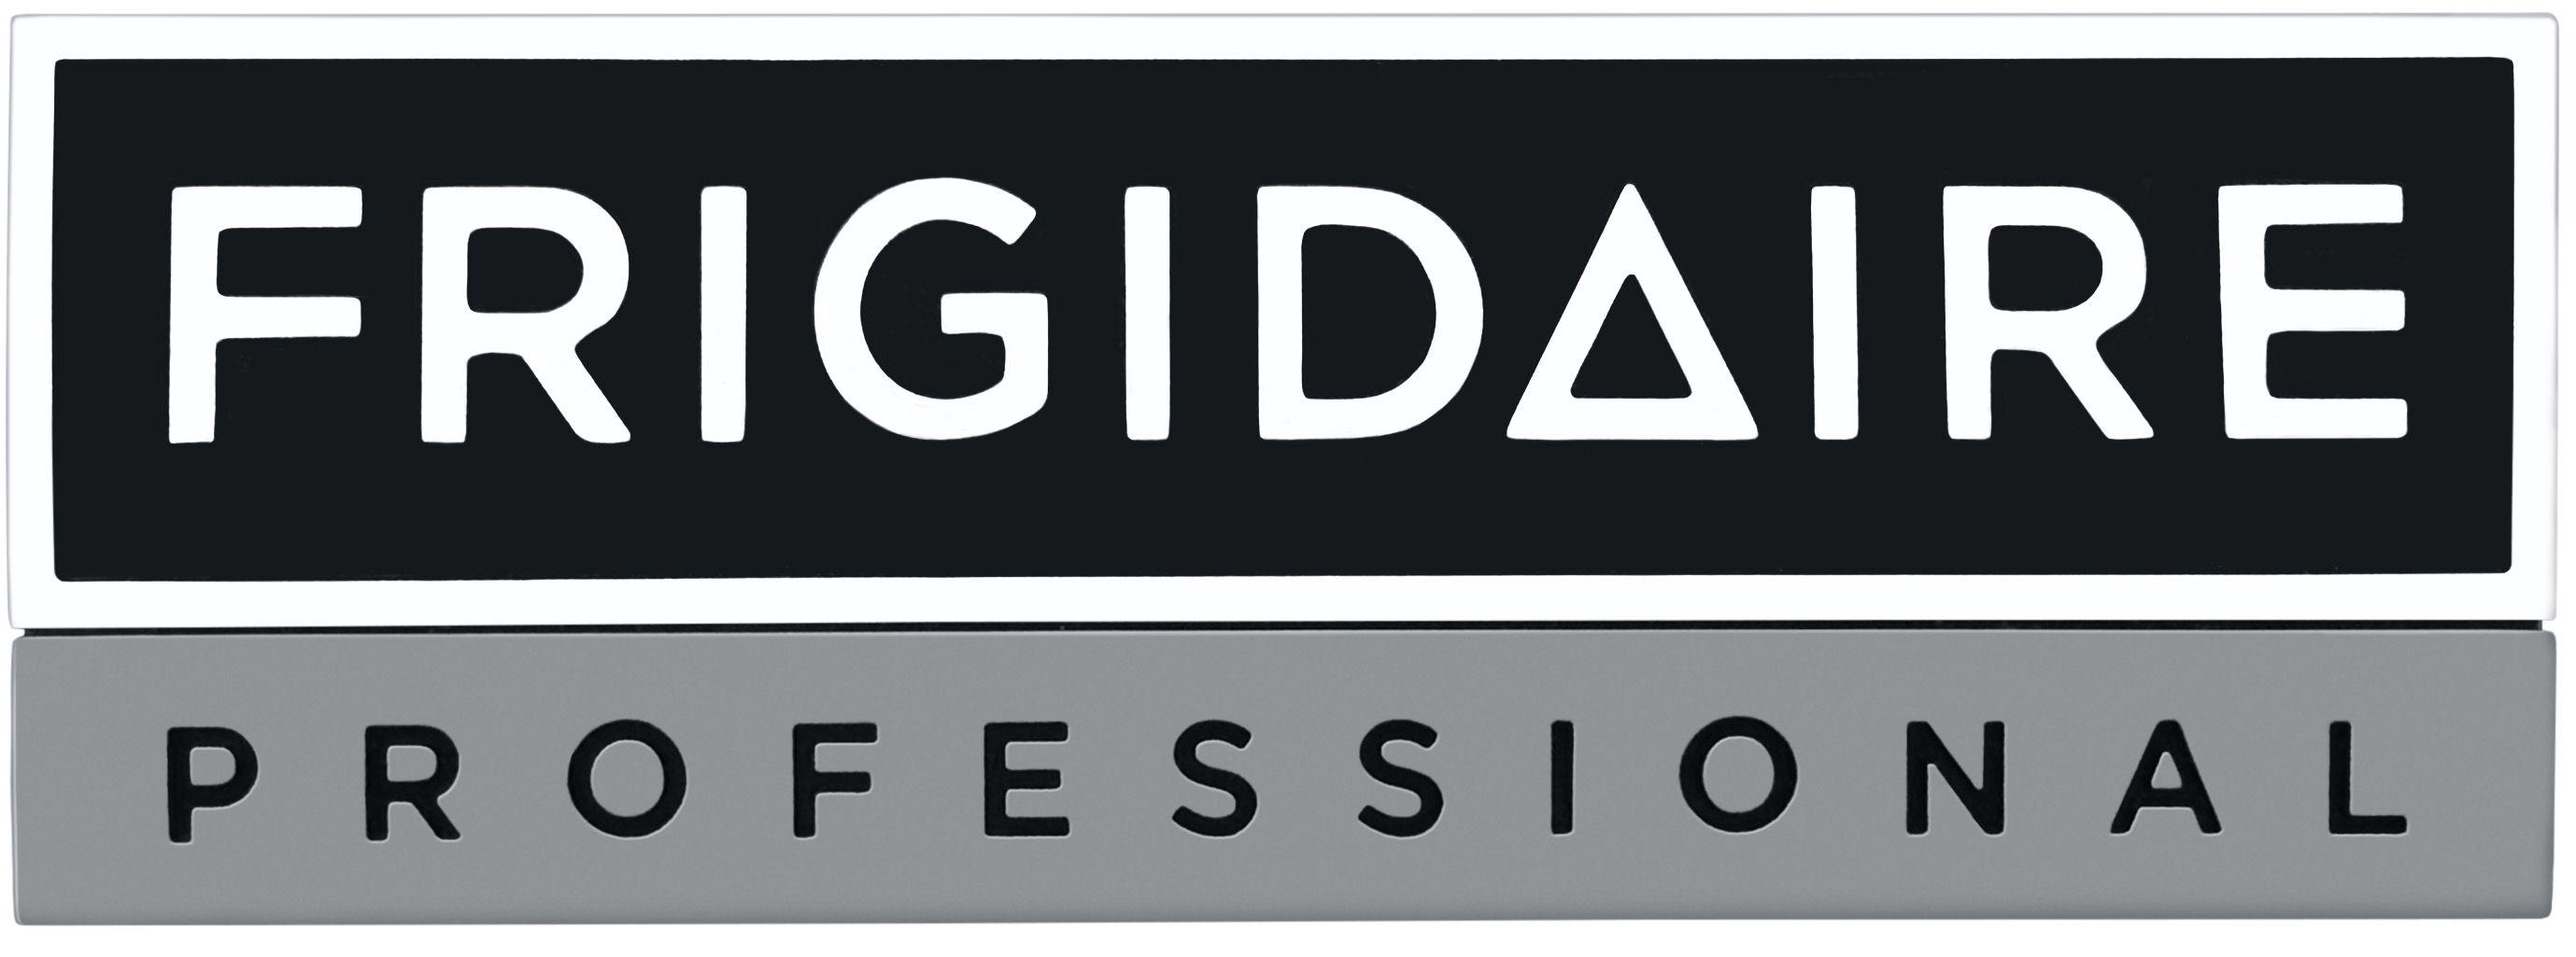 Frigidiare Logo - FRIGIDAIRE PROFESSIONAL® UNVEILS FIRST GLASS DOOR REFRIGERATOR AT ...